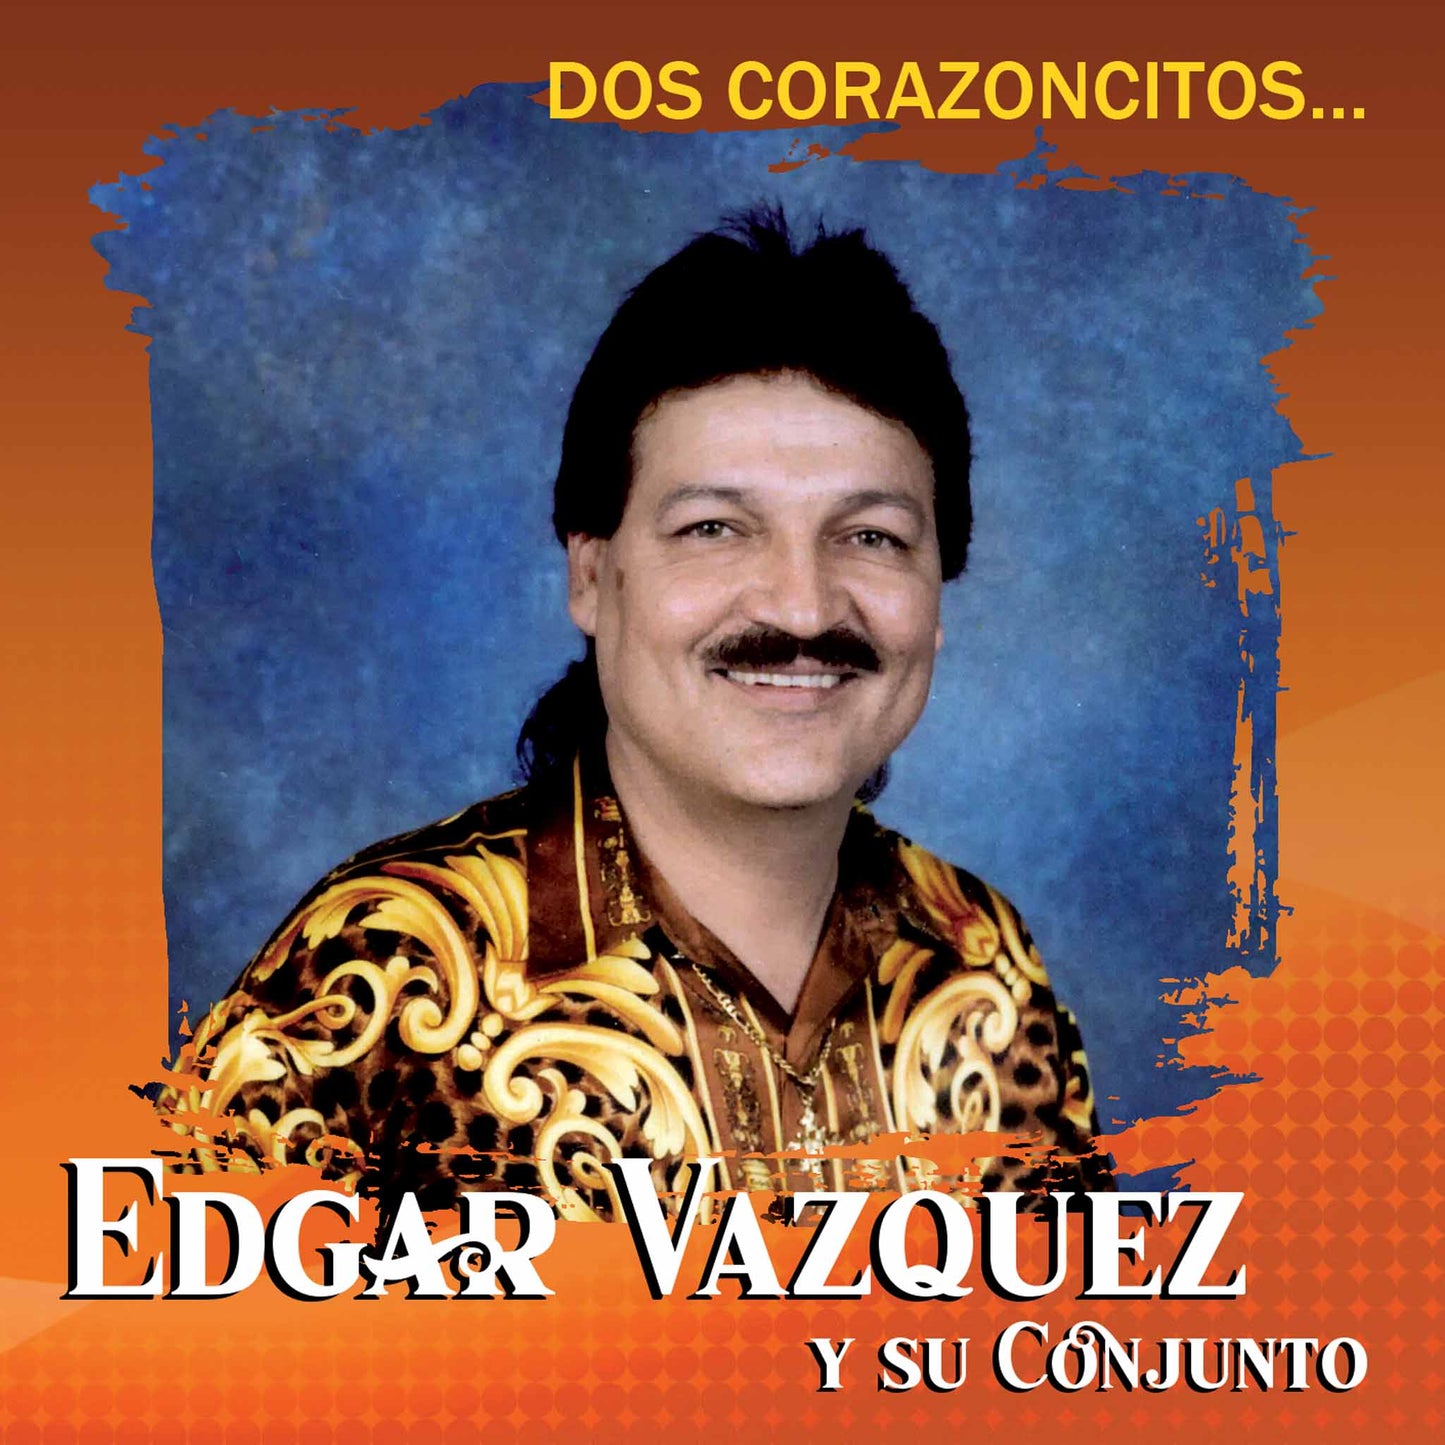 Edgar Vazquez - Dos Corazoncitos (CD)